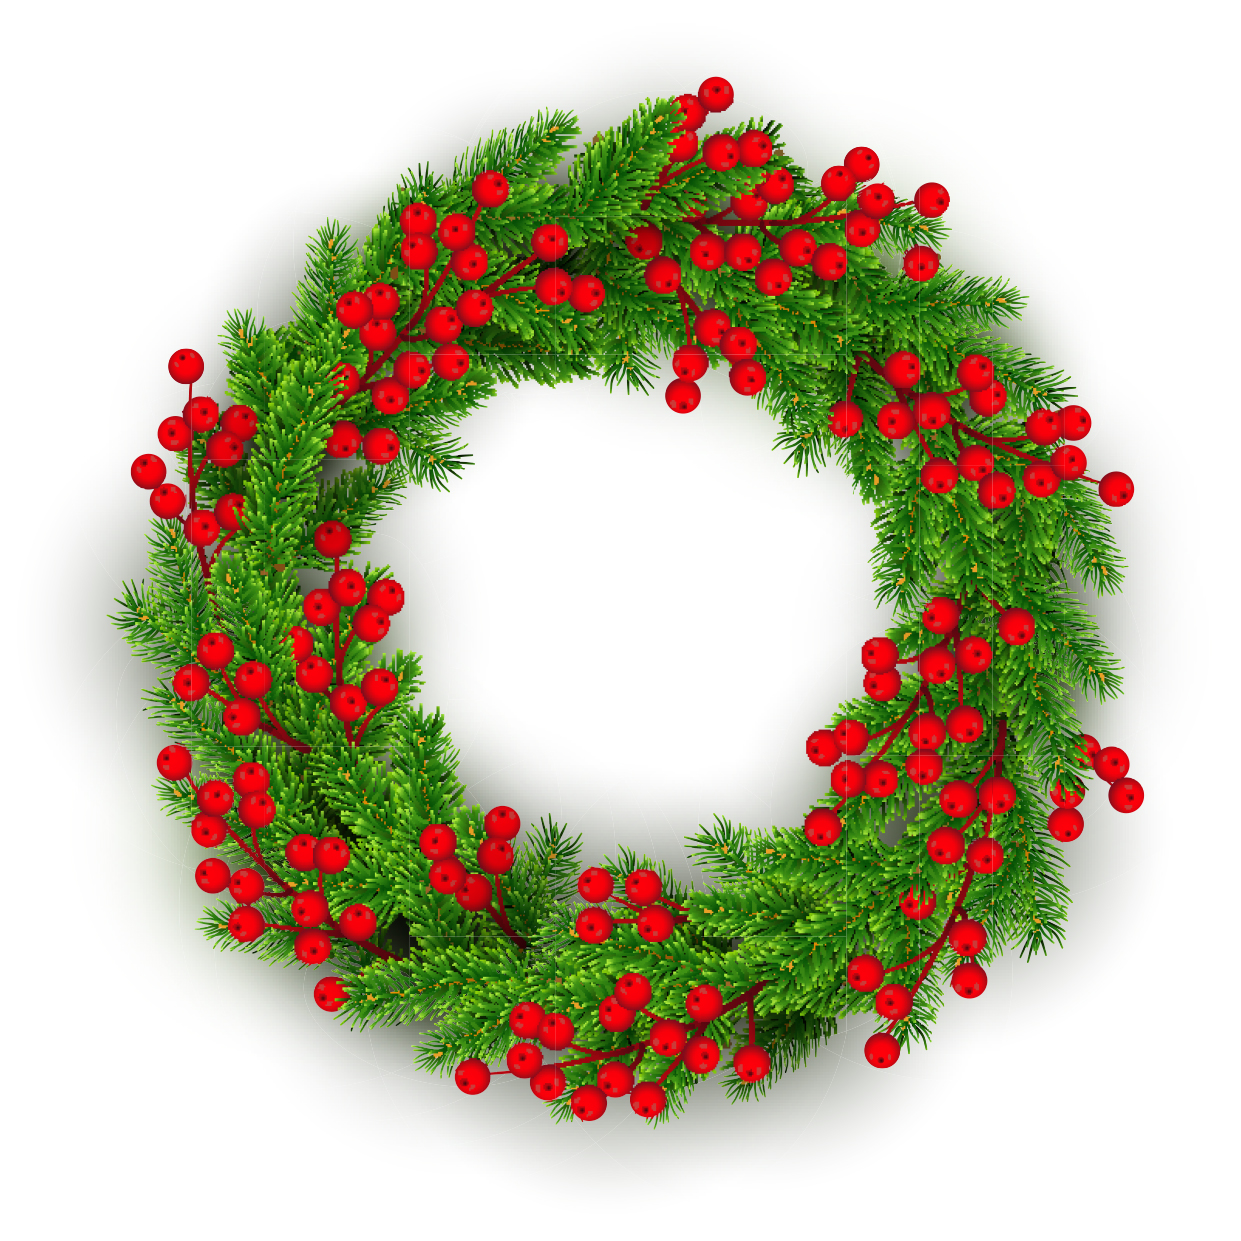 Winter Wreath - sent on November 26th, 2022